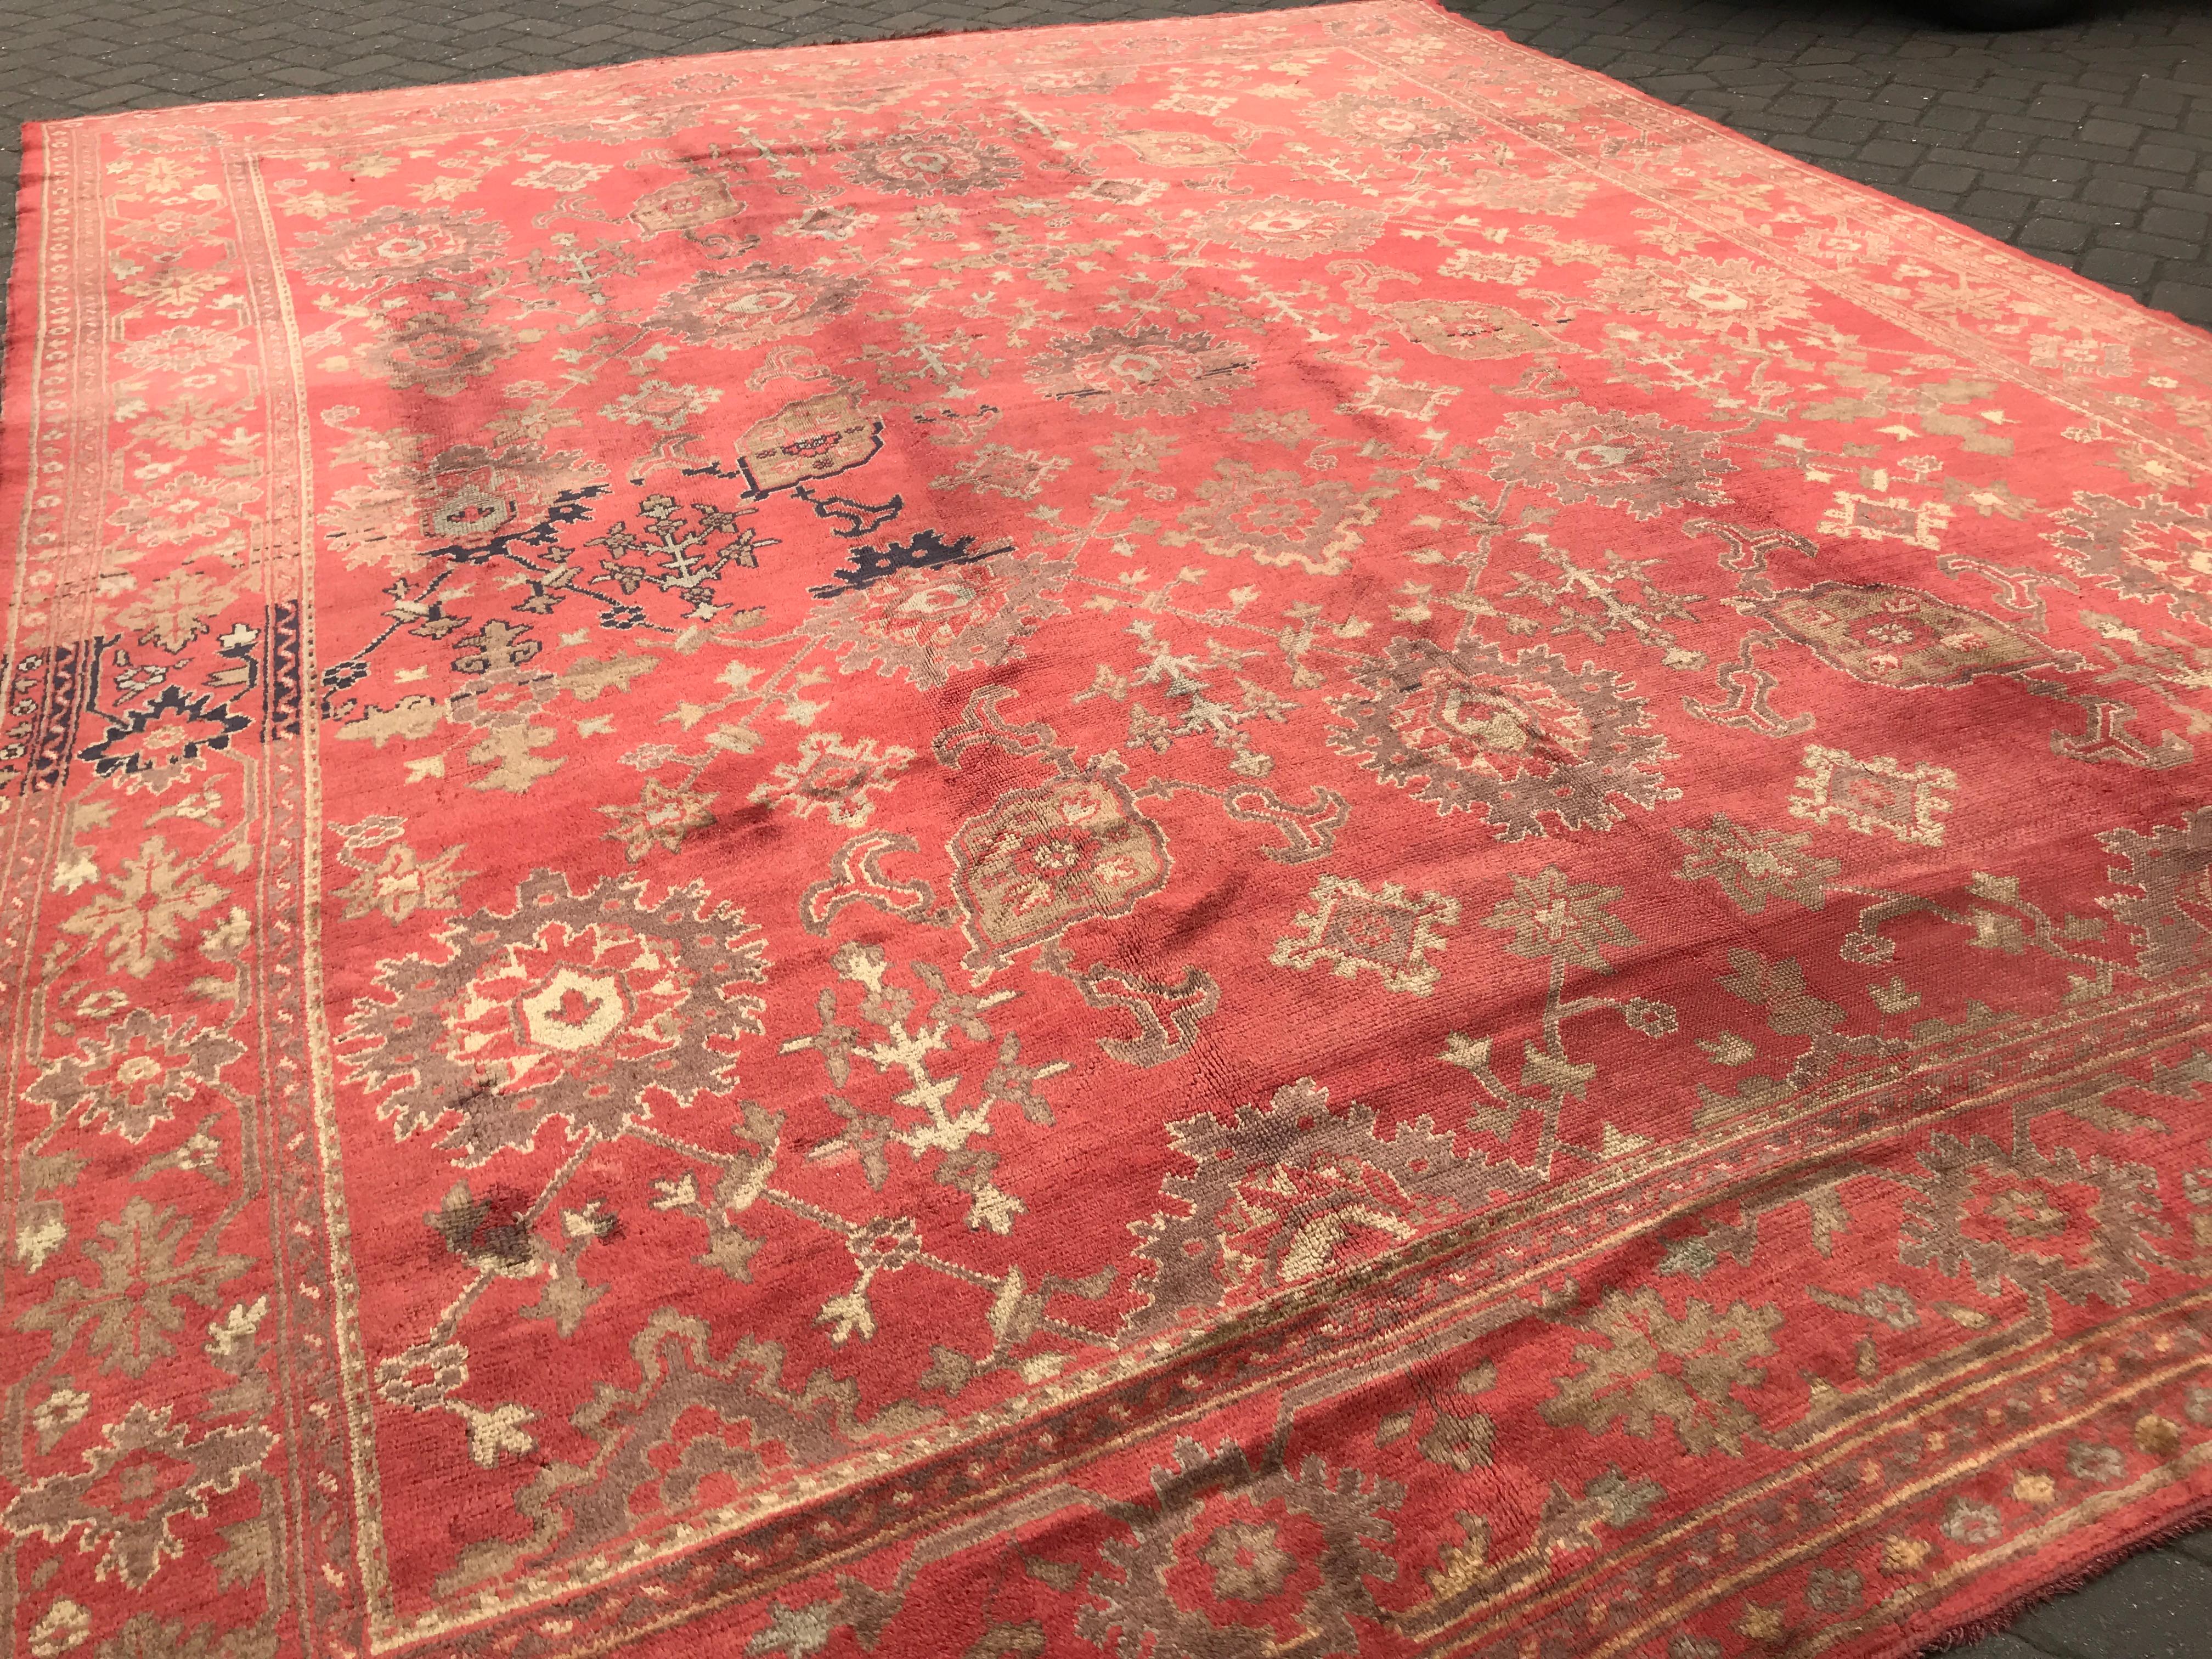 Antique Turkish rug

Measurement: 12'6